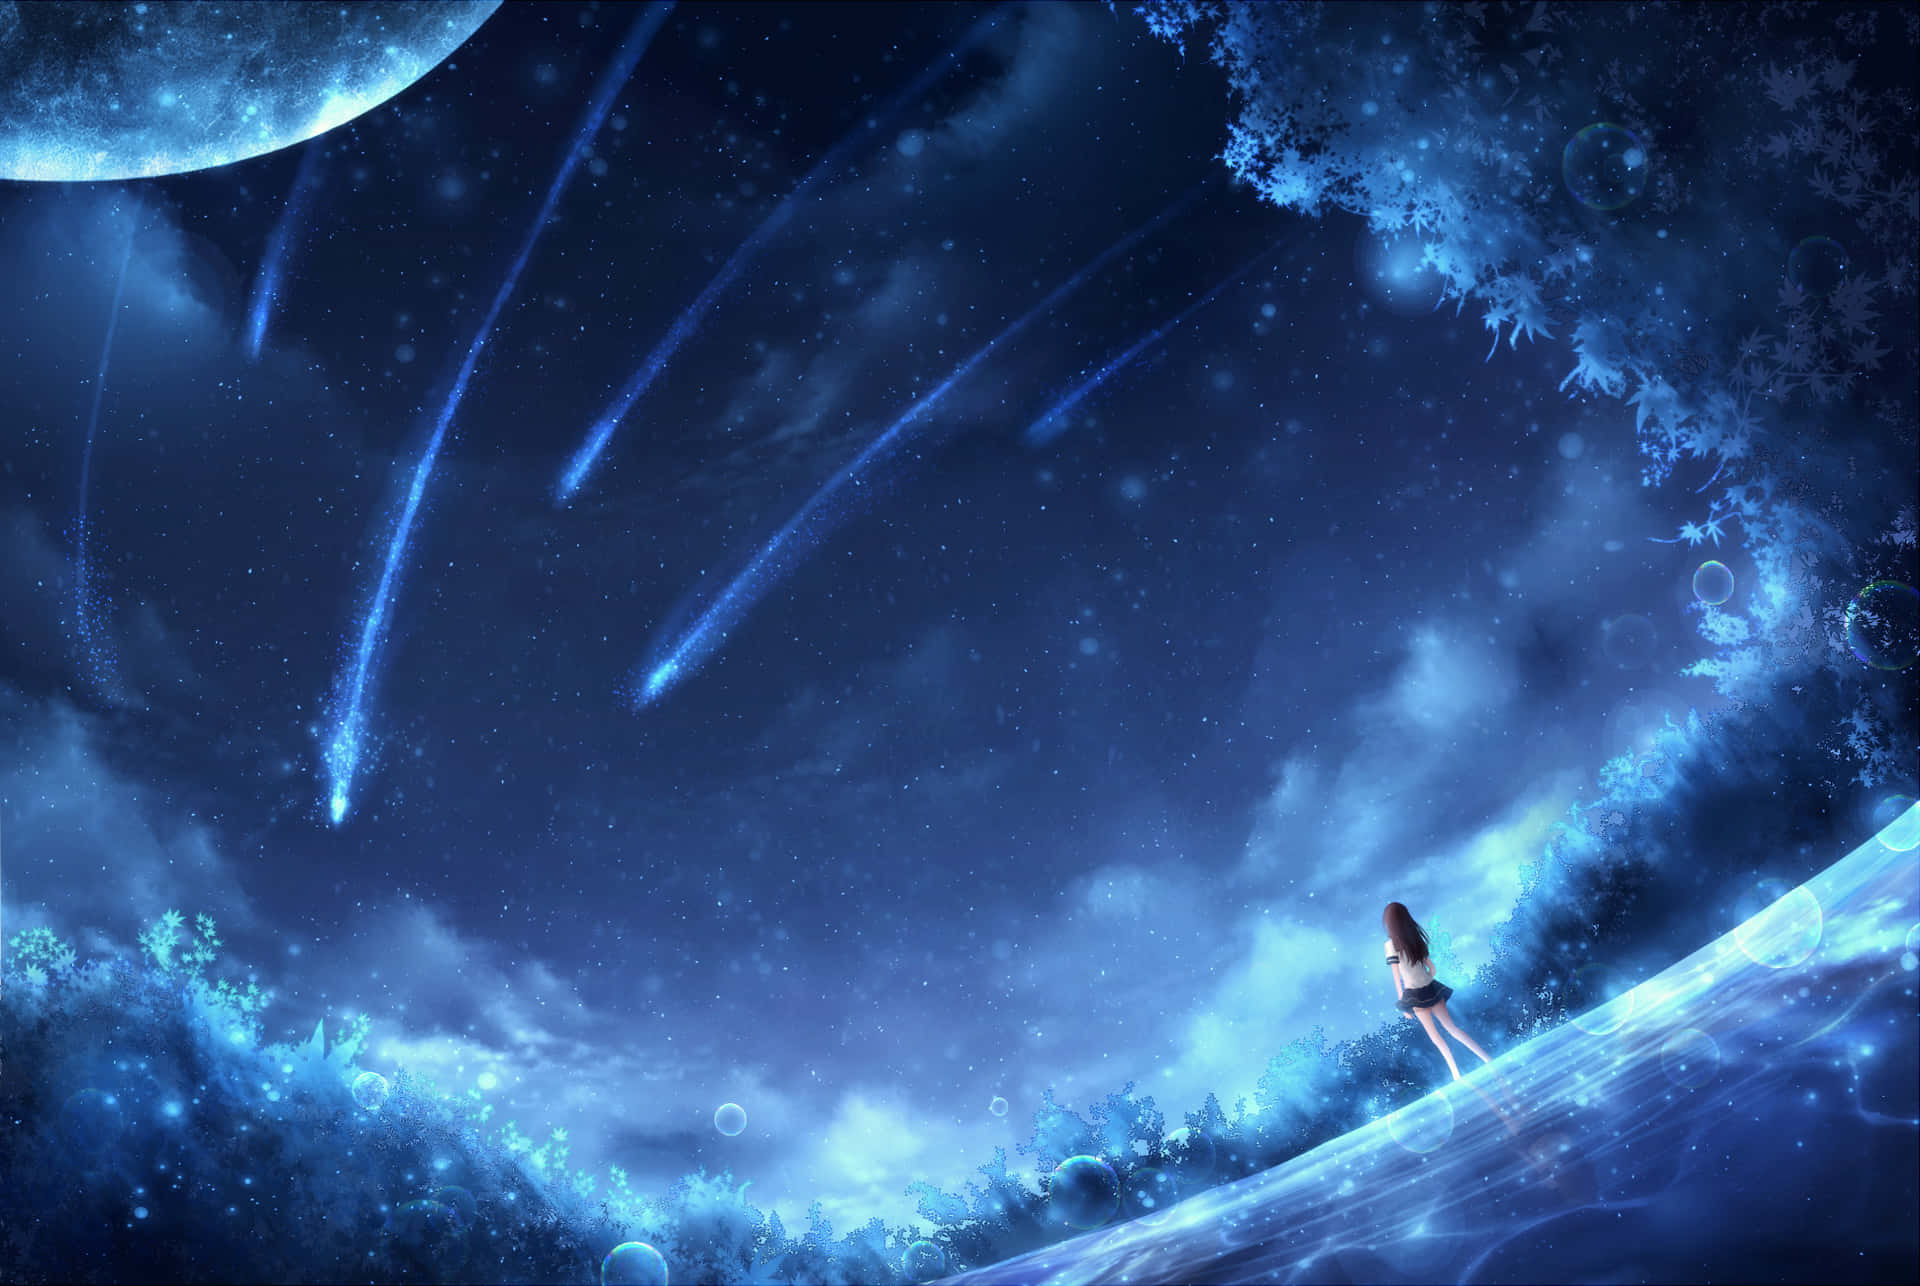 Anime Girl Night Scenery Background